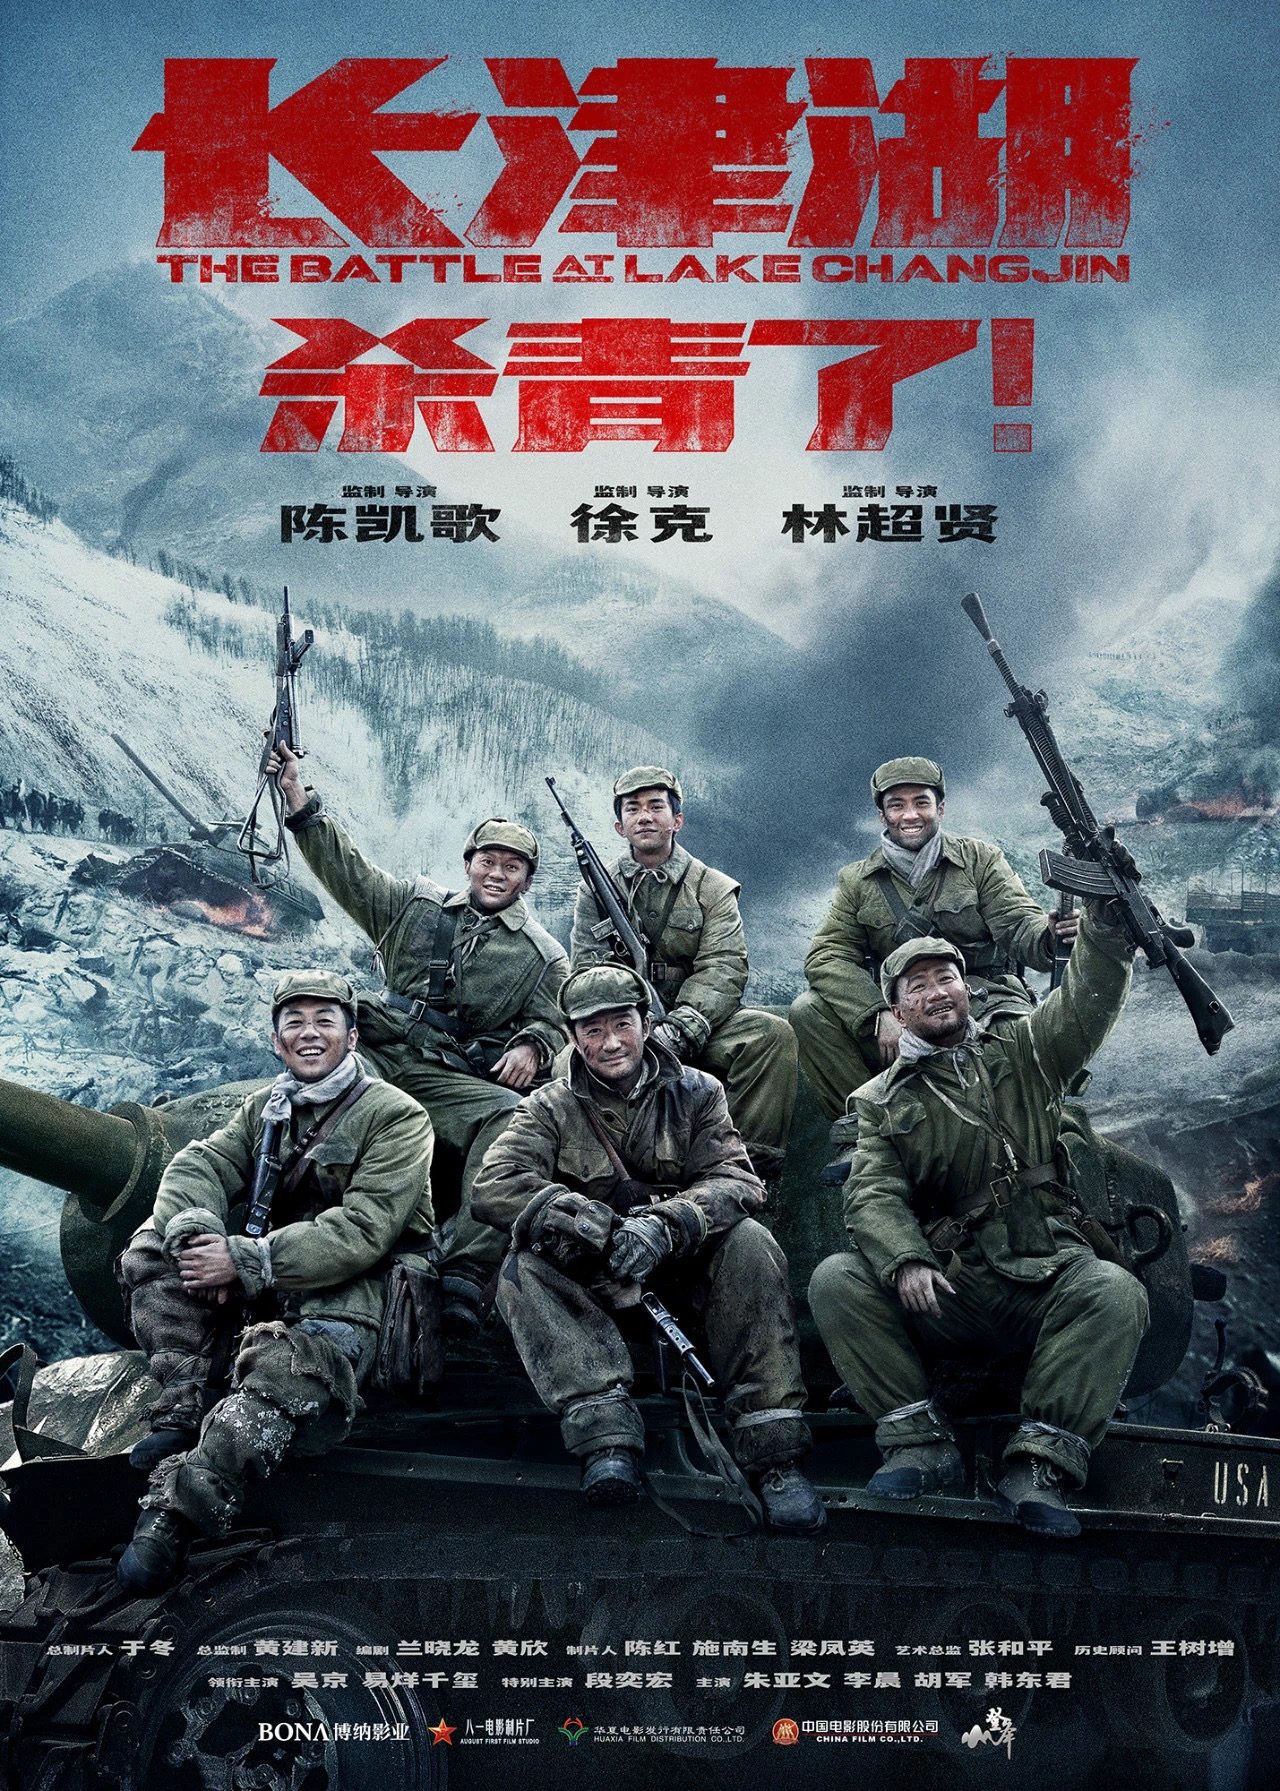 Korean War blockbuster ‘Battle at Lake Changjin’ to become China’s highest-grossing film